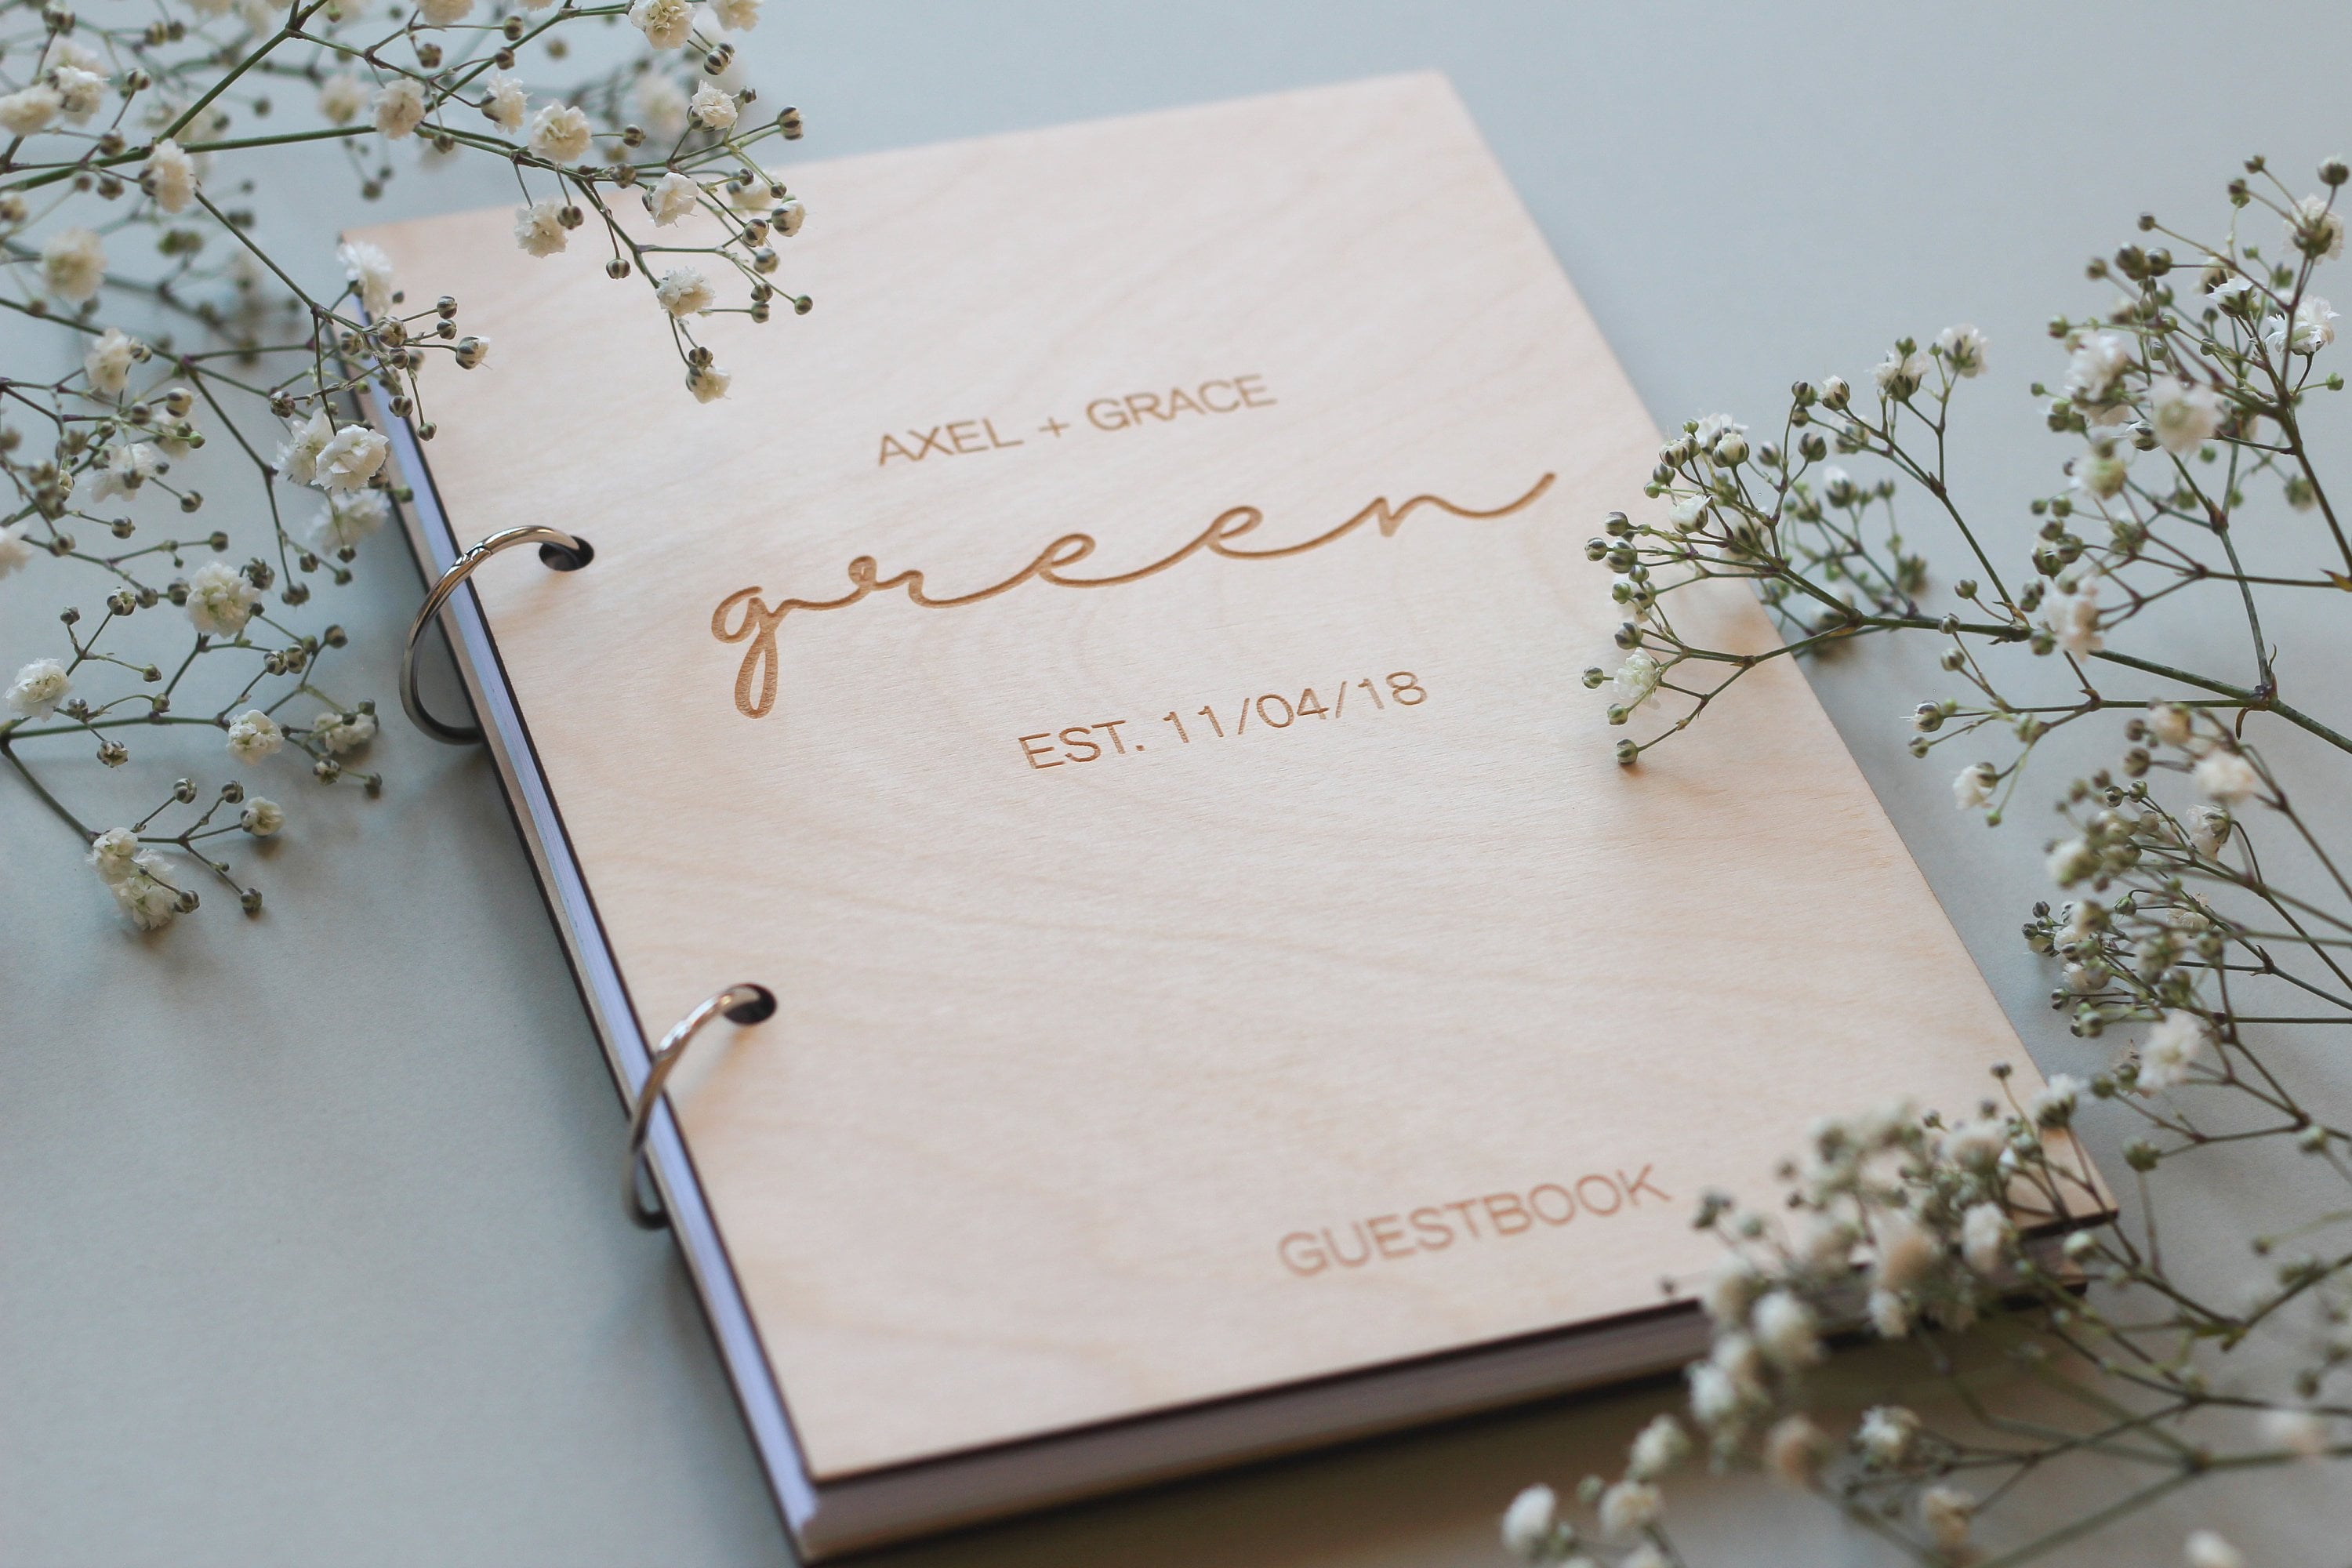 Custom Wooden Birch Photo Album Guest Book, Modern Wedding Guestbook With Simple Minimalistic Design, Text & Date